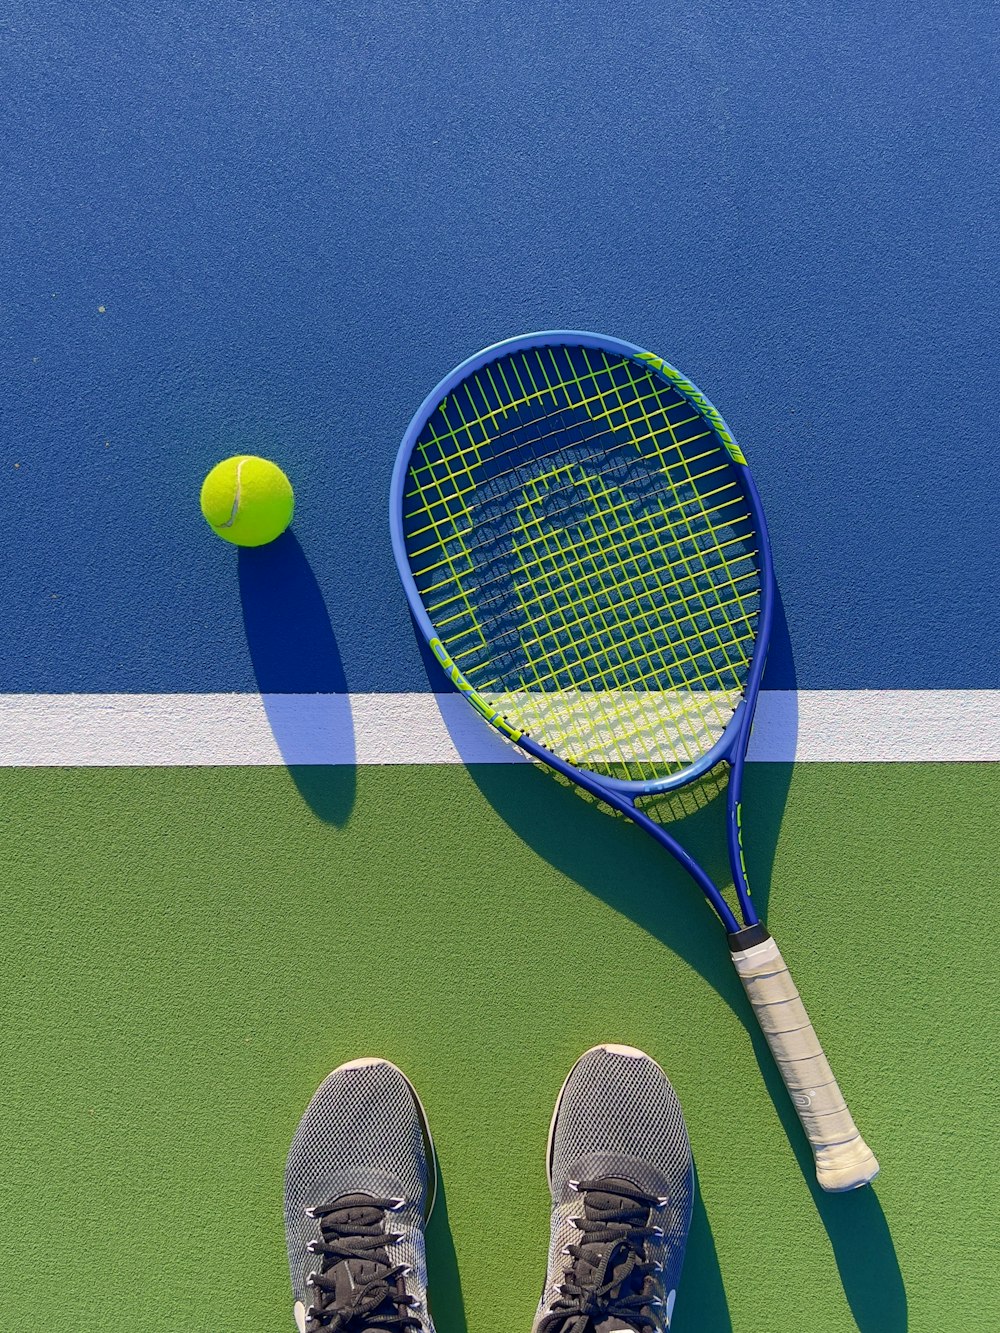 a tennis racket and a tennis ball on a court